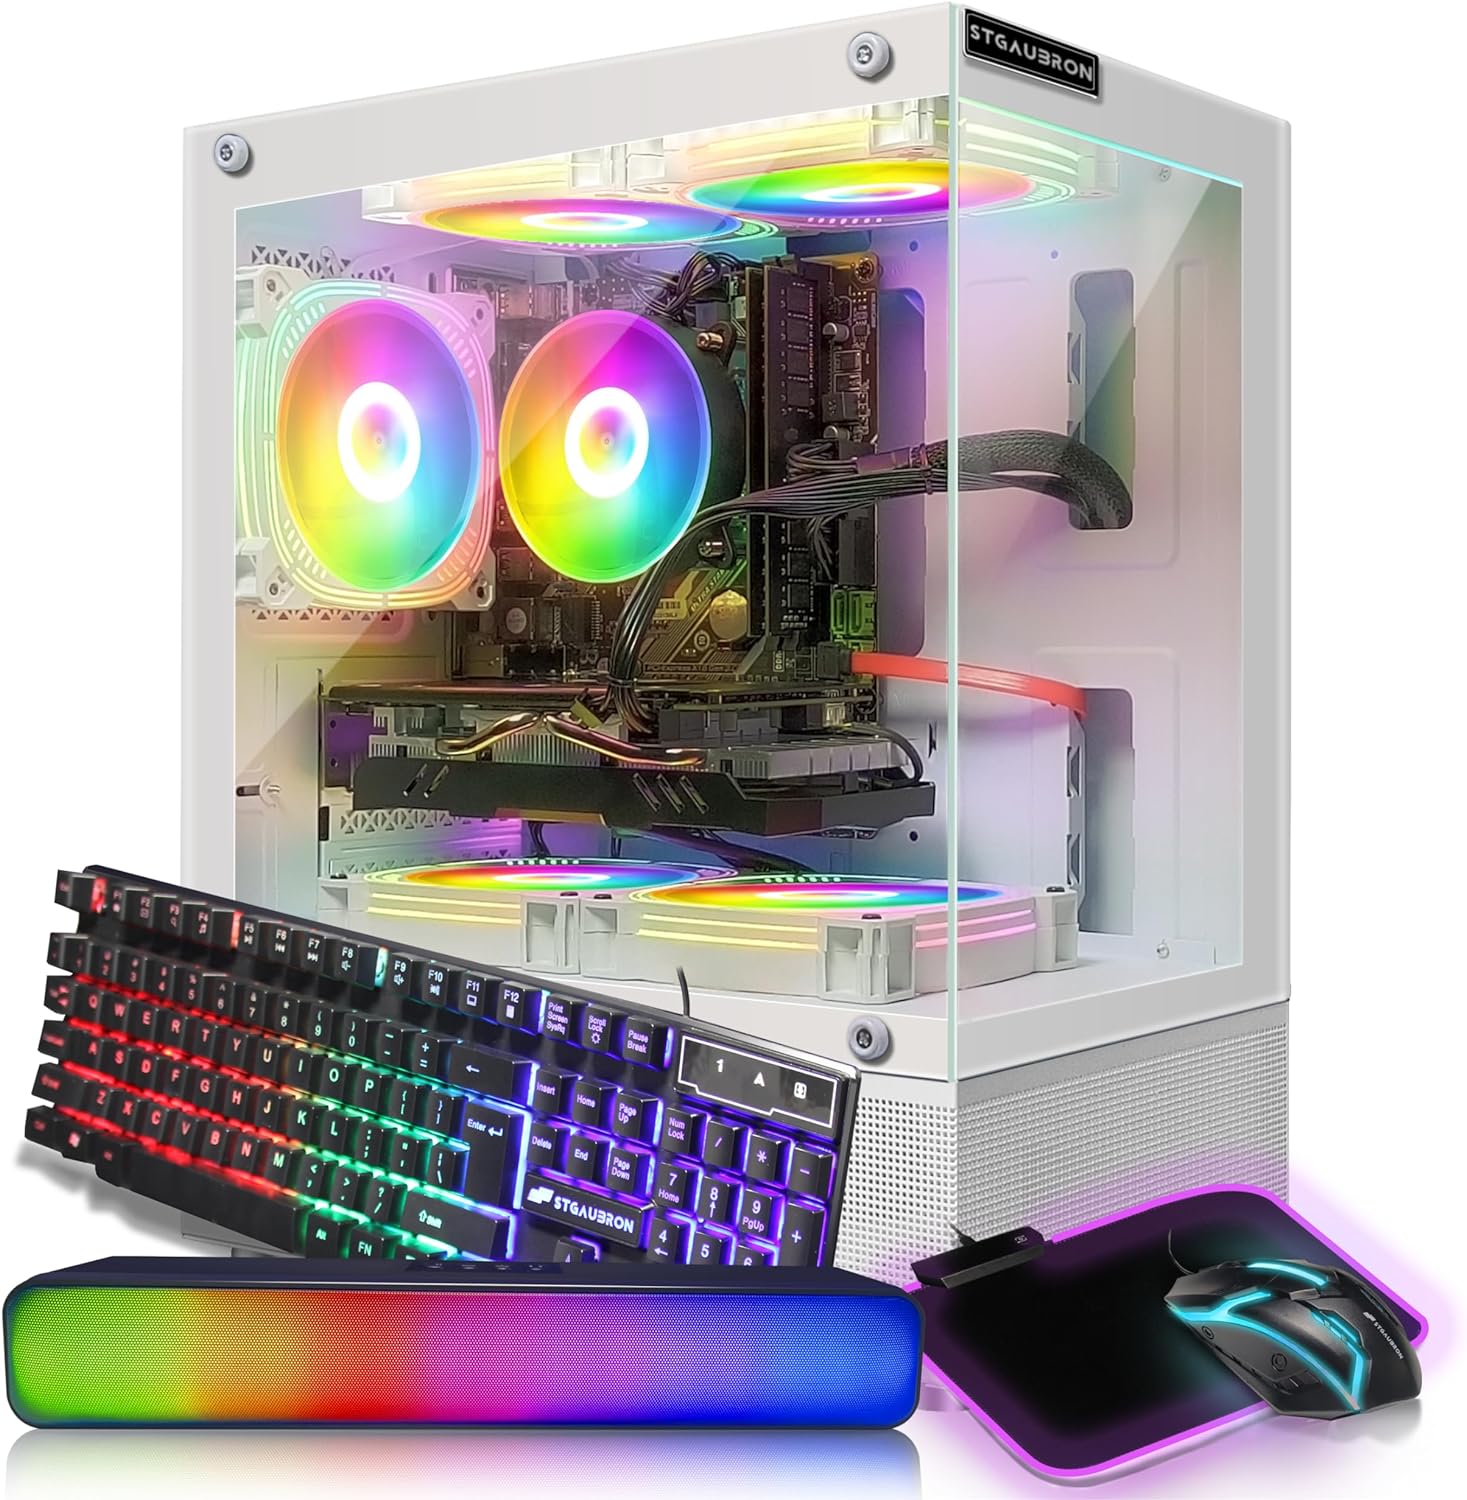 STGAubron Gaming Desktop PC,Intel Core i7-6700 up to 4.0G,32G DDR4,2T SSD,Radeon RX 580 16G GDDR5,600M WiFi,BT 5.0,RGB Fan x 3,RGB KeyboardMouse,RGB Mouse Pad,RGB BT Sound Bar,W10H64